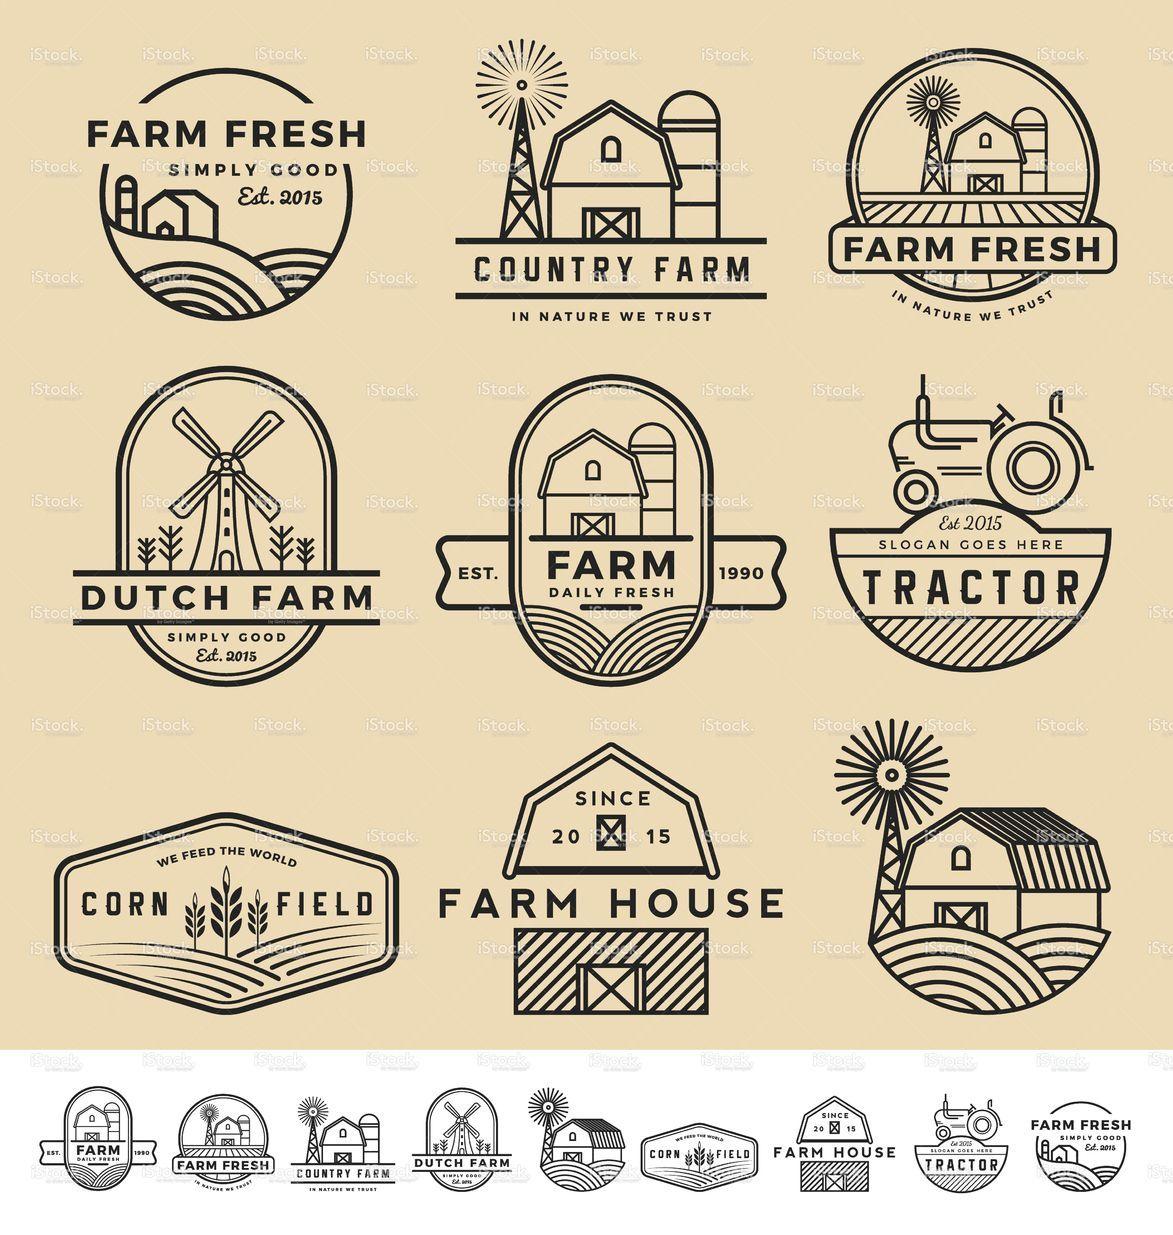 Generic Farm Logo - H Louie (louiehh) on Pinterest